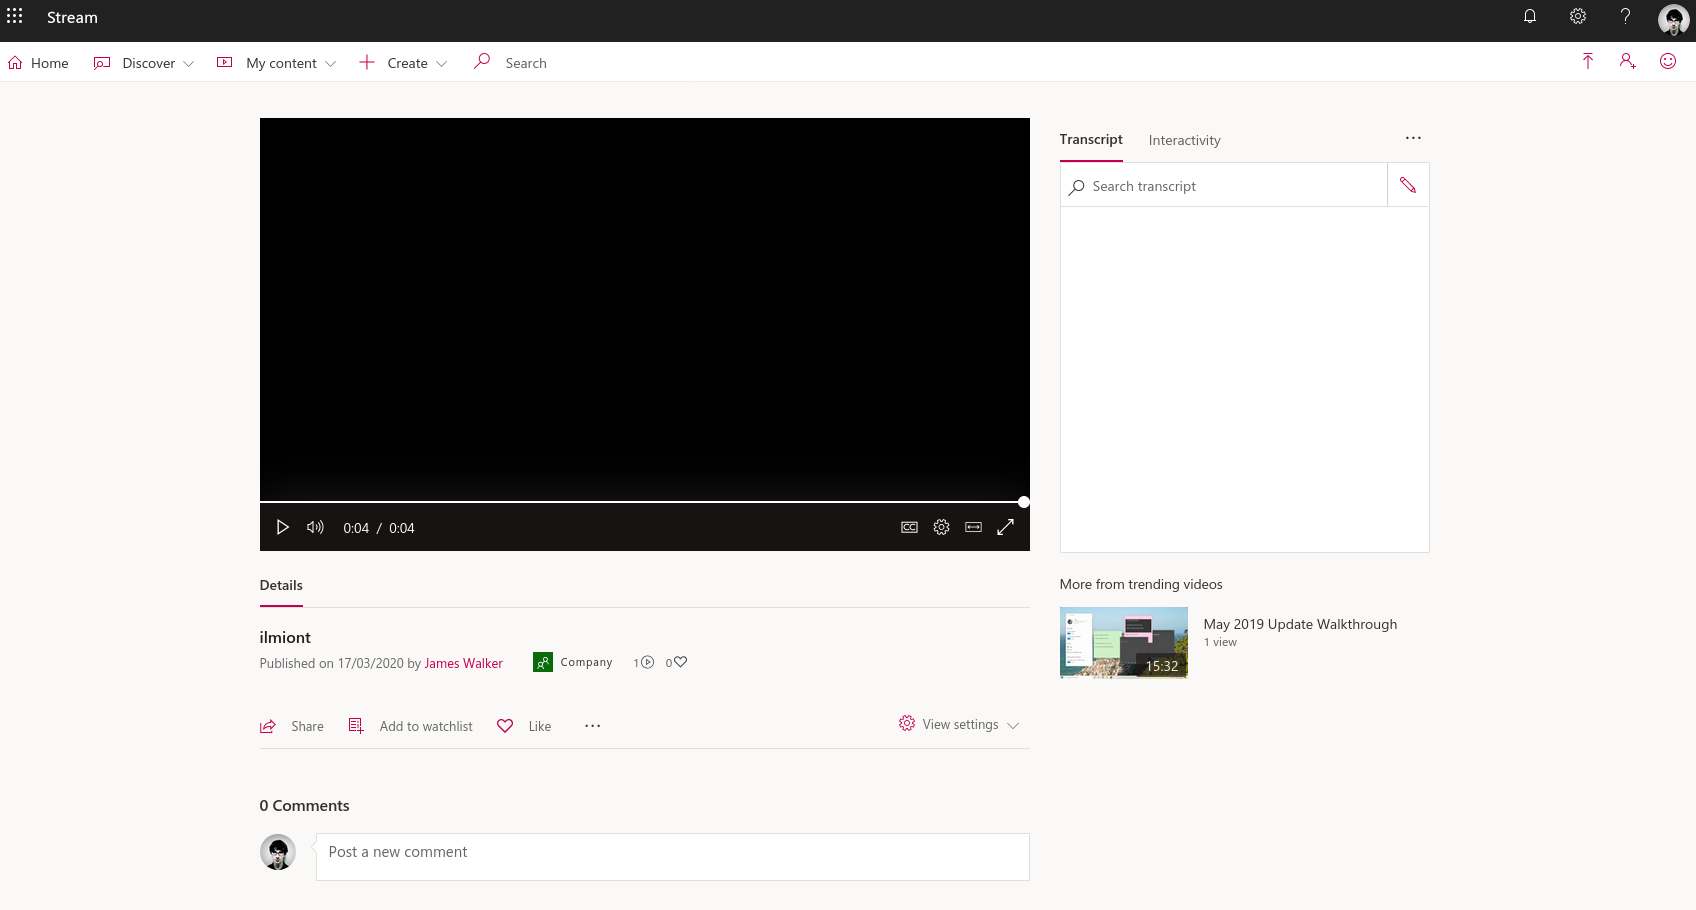 Captura de pantalla de compartir videos usando Microsoft Stream